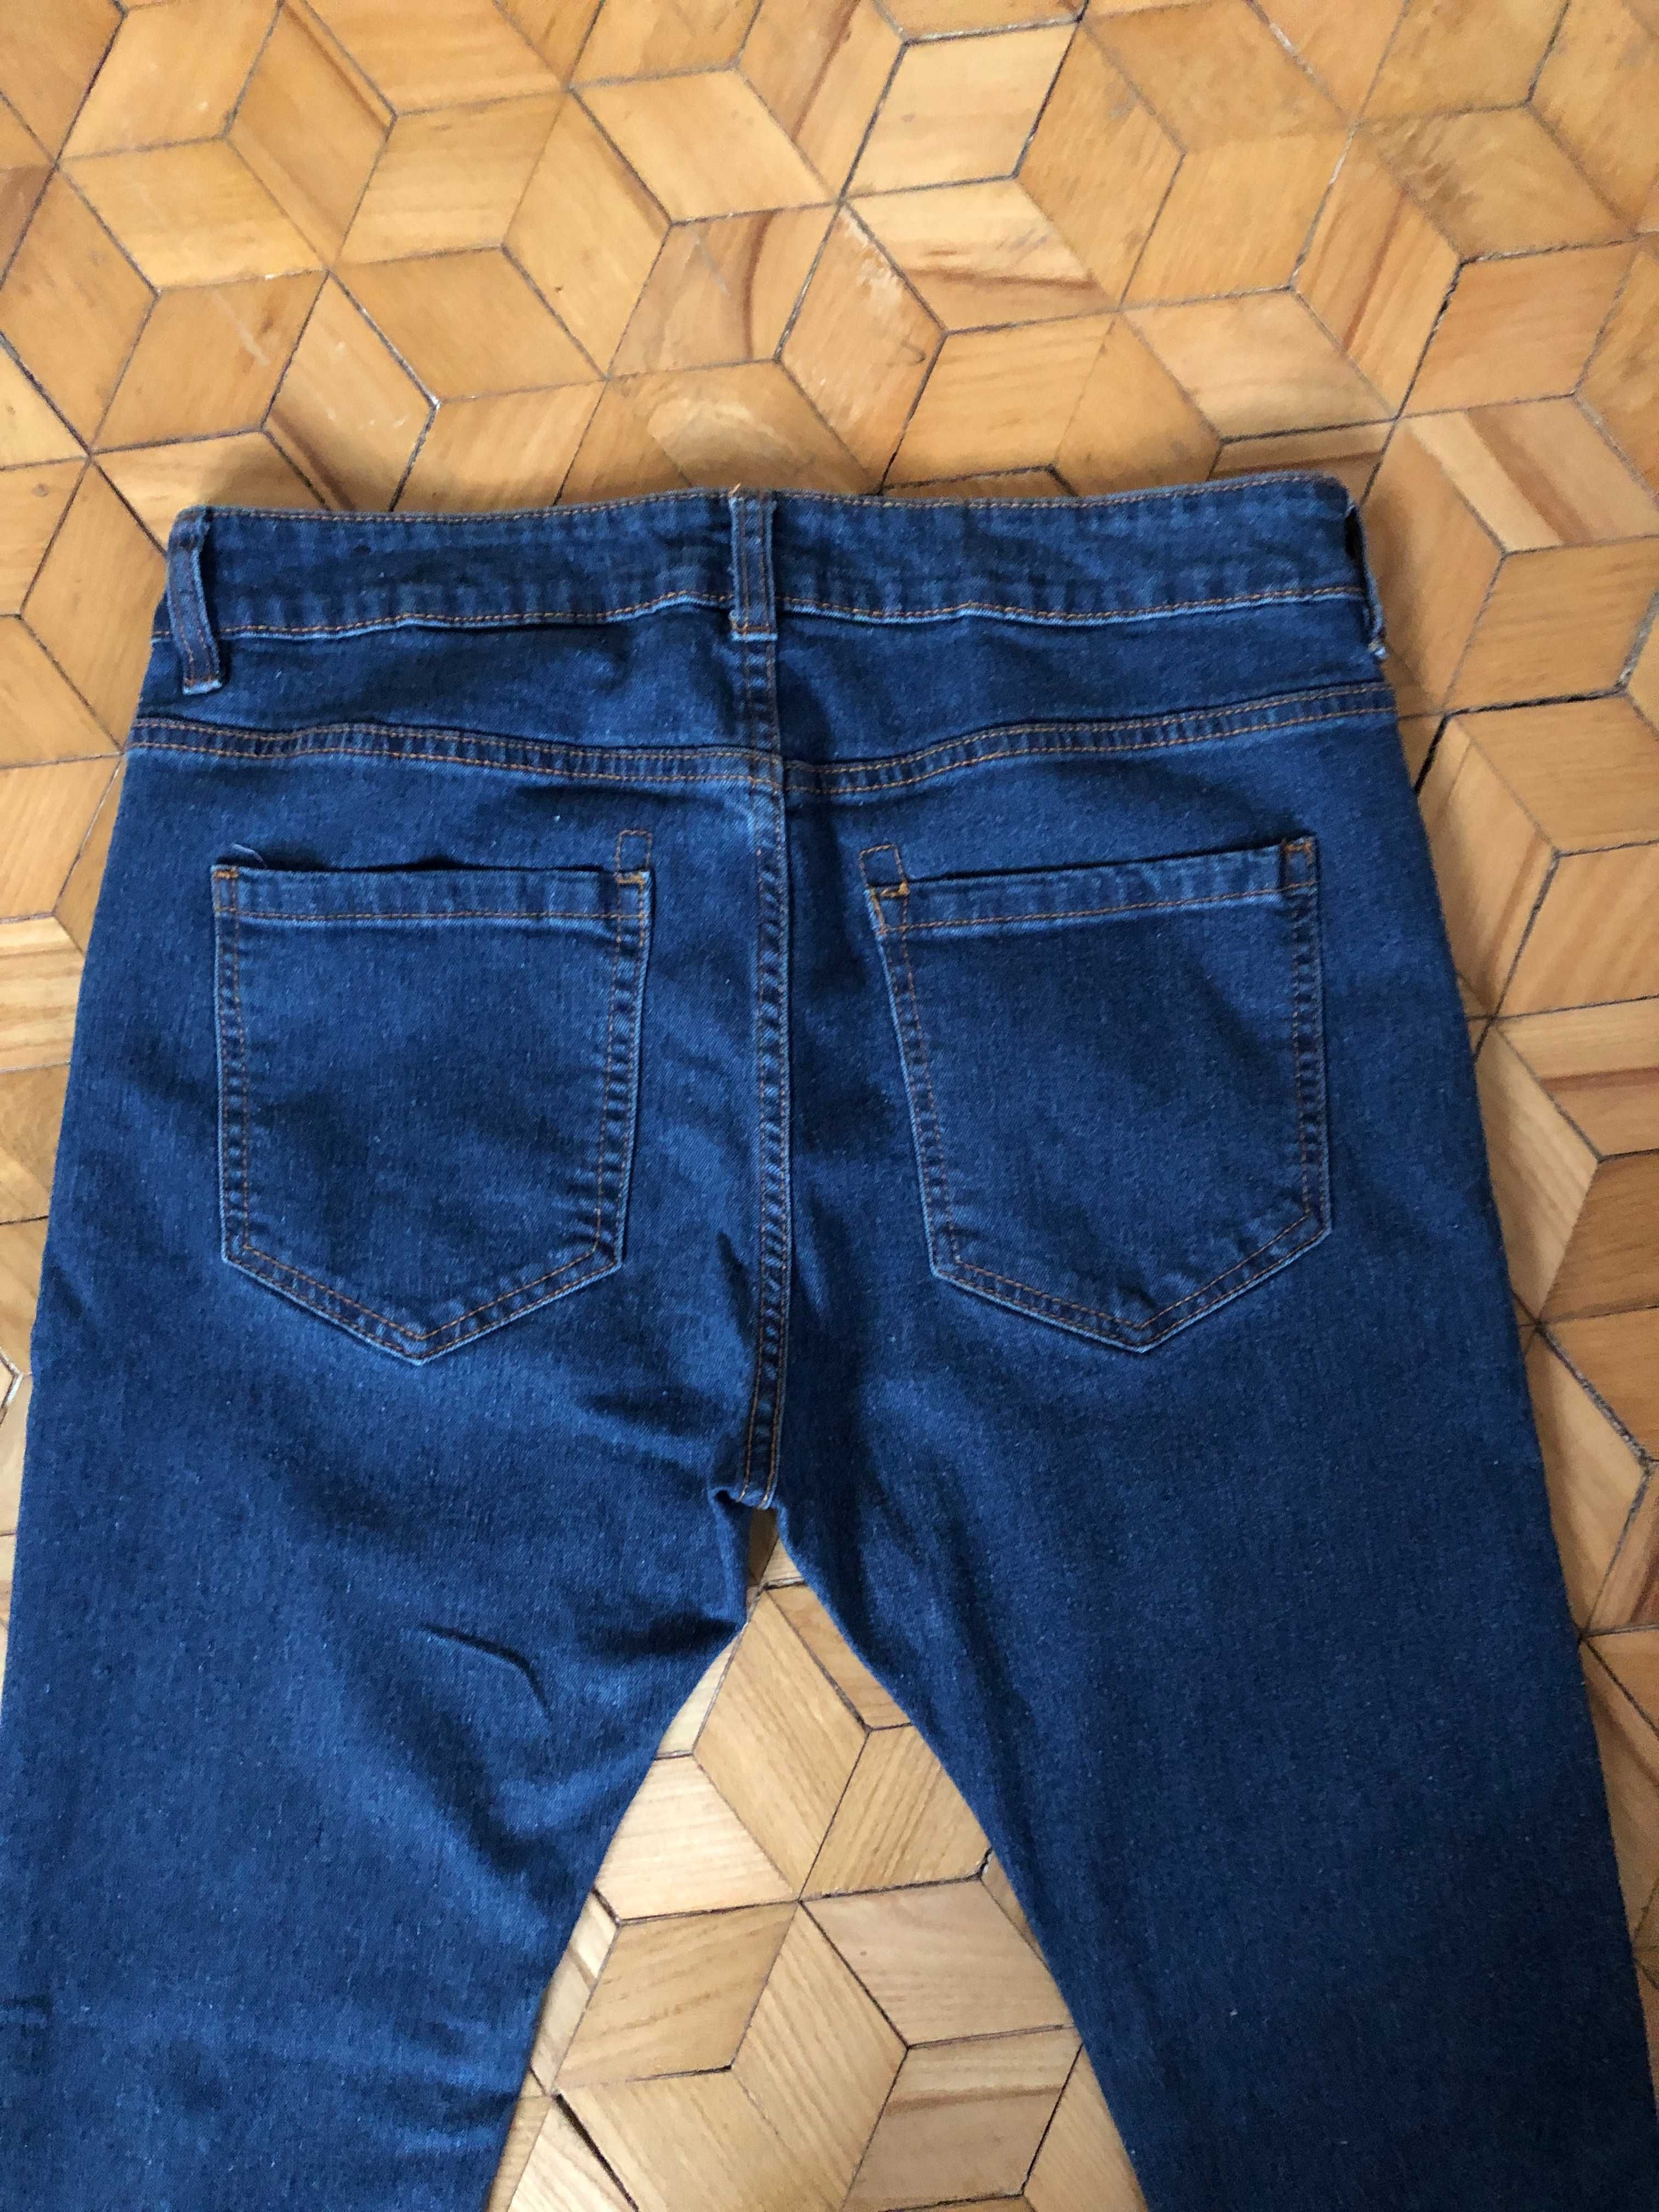 Spodnie jeansy Bershka super skinny fit 40